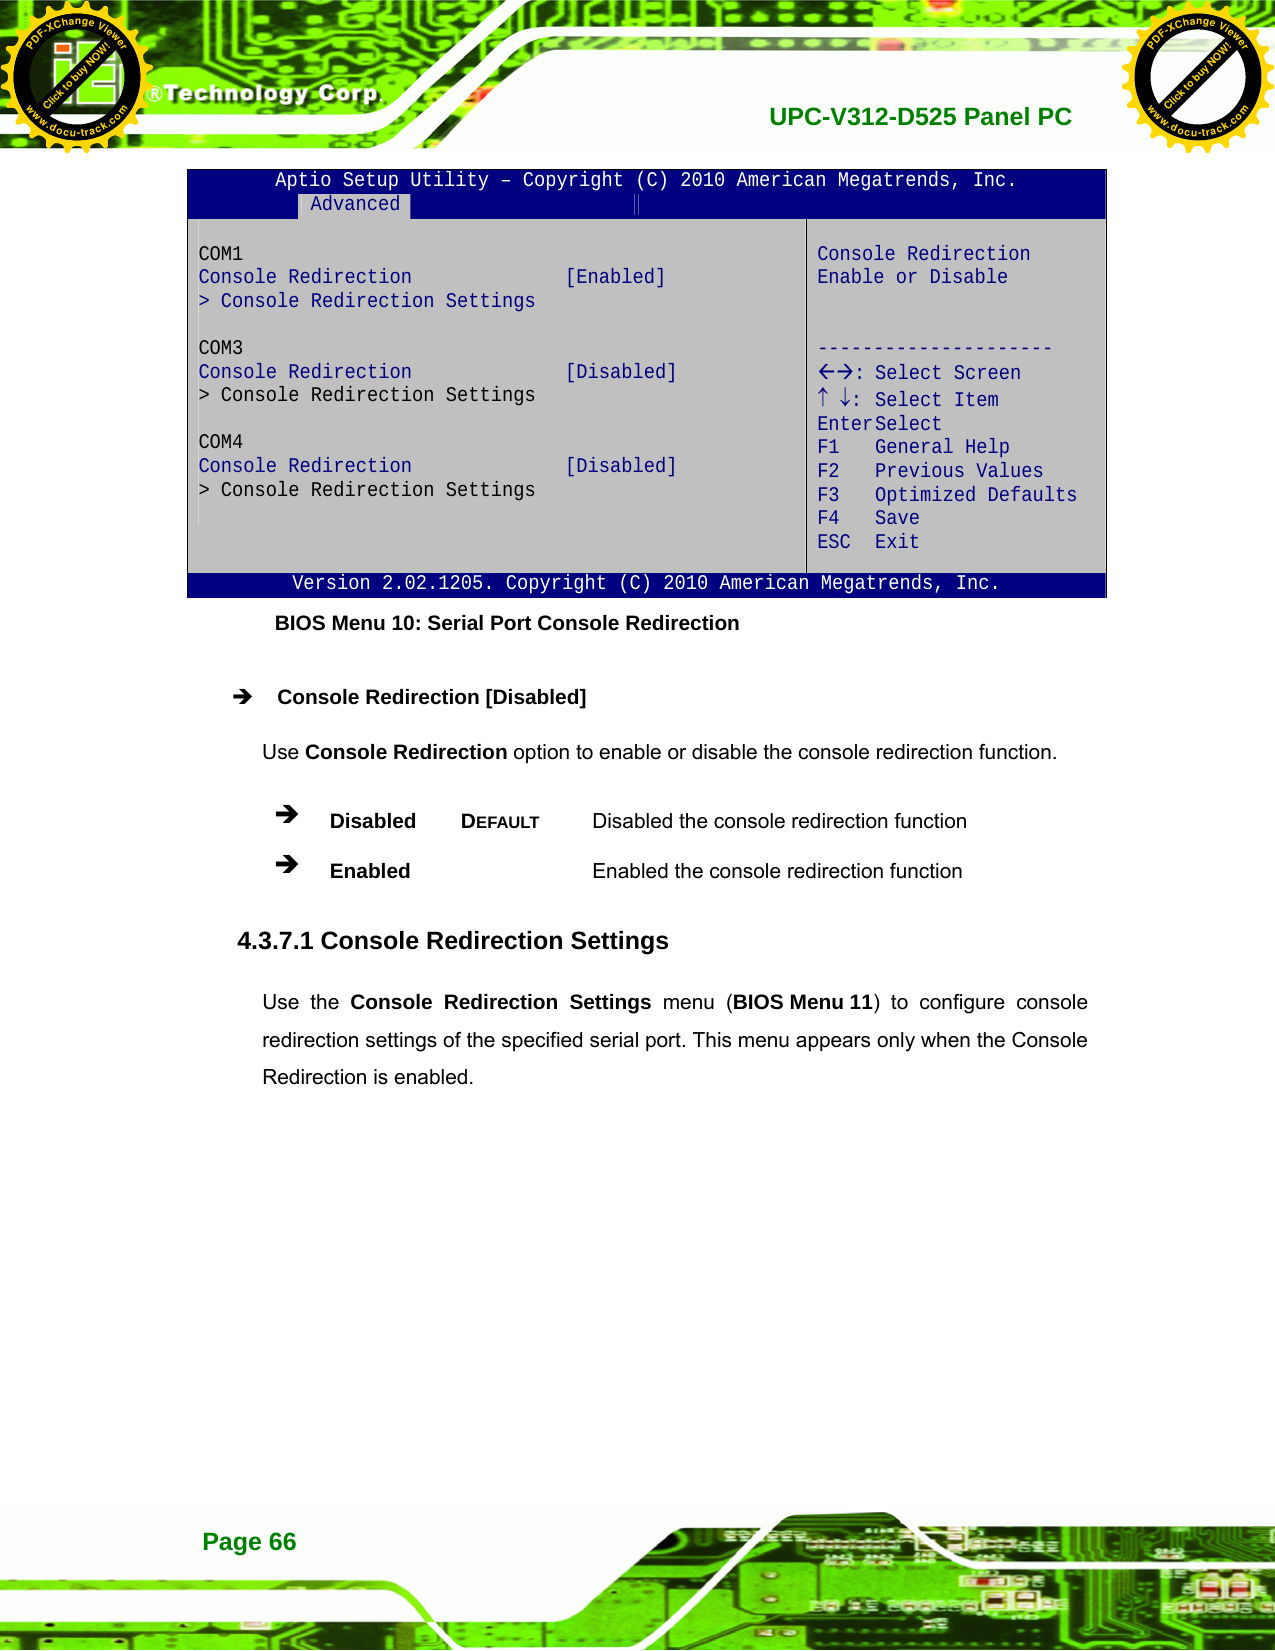   UPC-V312-D525 Panel PCPage 66 Aptio Setup Utility – Copyright (C) 2010 American Megatrends, Inc.  Advanced              COM1  Console Redirection  [Enabled] &gt; Console Redirection Settings  COM3  Console Redirection  [Disabled] &gt; Console Redirection Settings  COM4  Console Redirection  [Disabled] &gt; Console Redirection Settings   Console Redirection Enable or Disable   --------------------- ÅÆ: Select Screen ↑ ↓: Select Item Enter Select F1 General Help F2 Previous Values F3 Optimized Defaults F4 Save  ESC Exit Version 2.02.1205. Copyright (C) 2010 American Megatrends, Inc. BIOS Menu 10: Serial Port Console Redirection Î Console Redirection [Disabled] Use Console Redirection option to enable or disable the console redirection function. Î Disabled DEFAULT Disabled the console redirection function Î Enabled   Enabled the console redirection function 4.3.7.1 Console Redirection Settings Use the Console Redirection Settings menu (BIOS Menu 11) to configure console redirection settings of the specified serial port. This menu appears only when the Console Redirection is enabled. Click to buy NOW!PDF-XChange Viewerwww.docu-track.comClick to buy NOW!PDF-XChange Viewerwww.docu-track.com